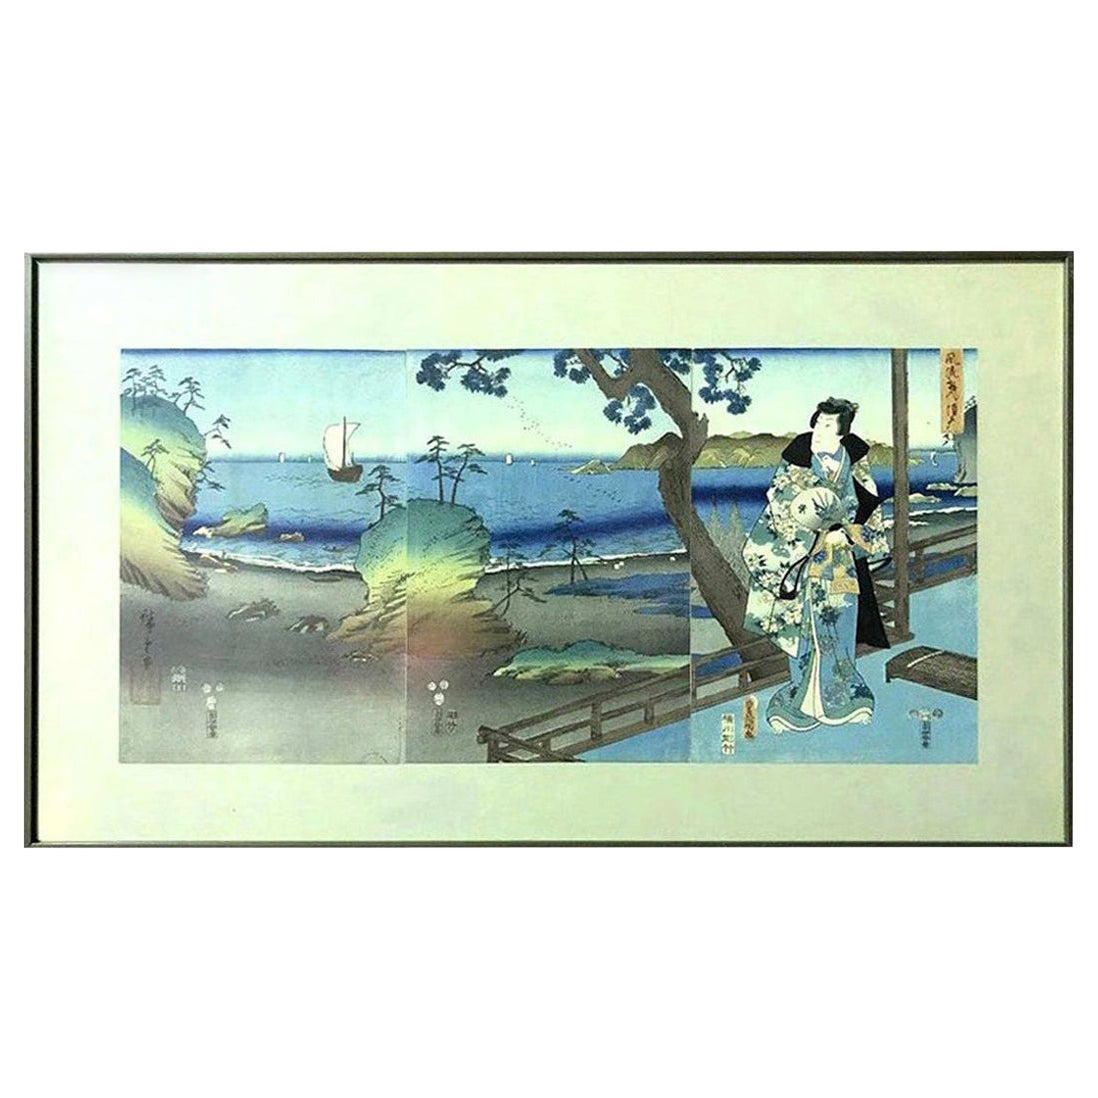 Ando Hiroshige & Tokoyuni Kunisada Prince Genji en exil à Suma Oban Triptyque